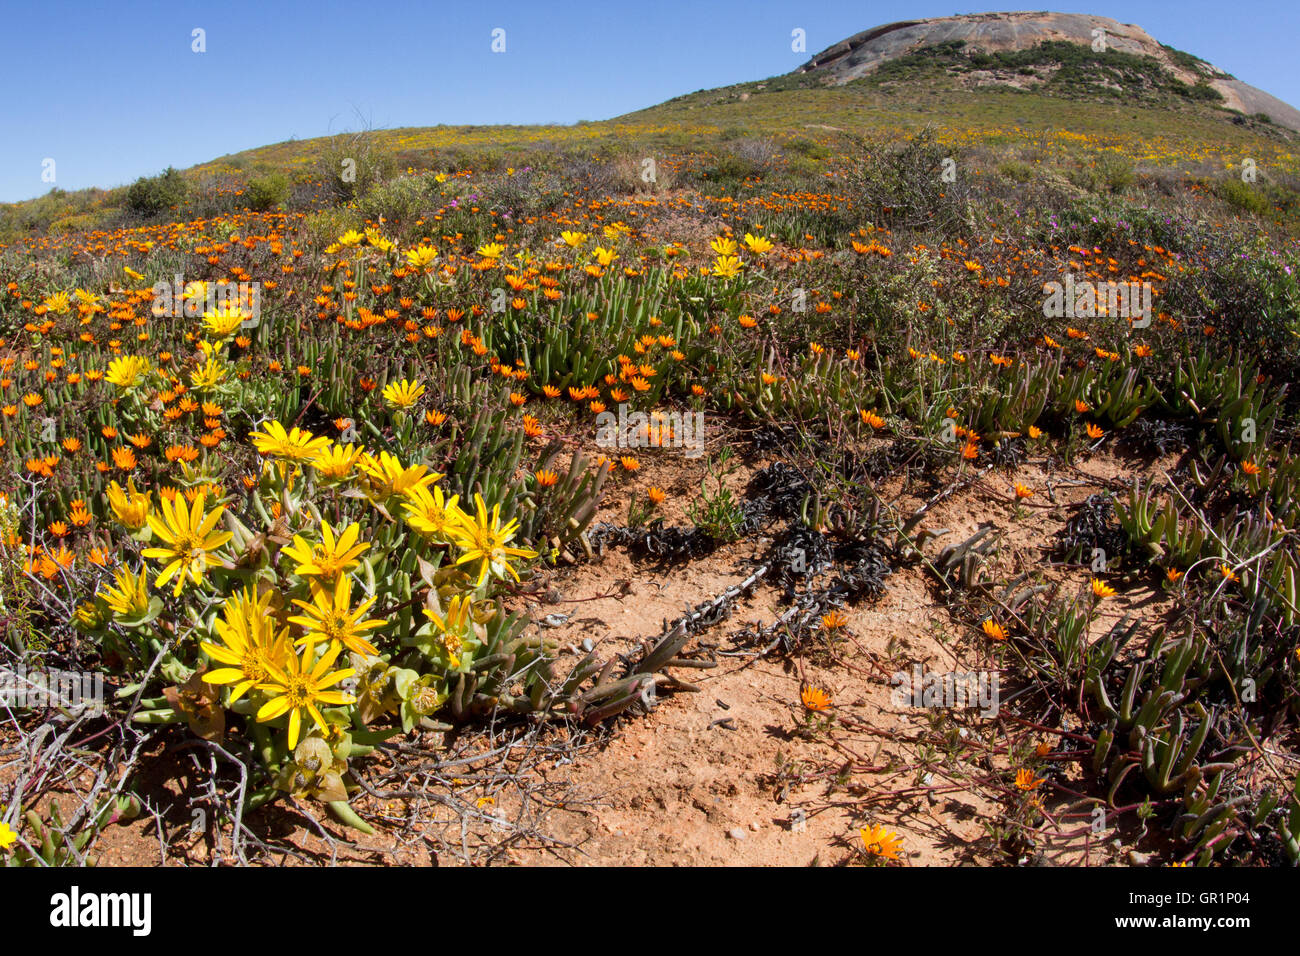 Wüste blüht: Blumen nach starken Regenfällen in der Sukkulentenkaroo Wüste, Namaqualand, Südafrika Stockfoto